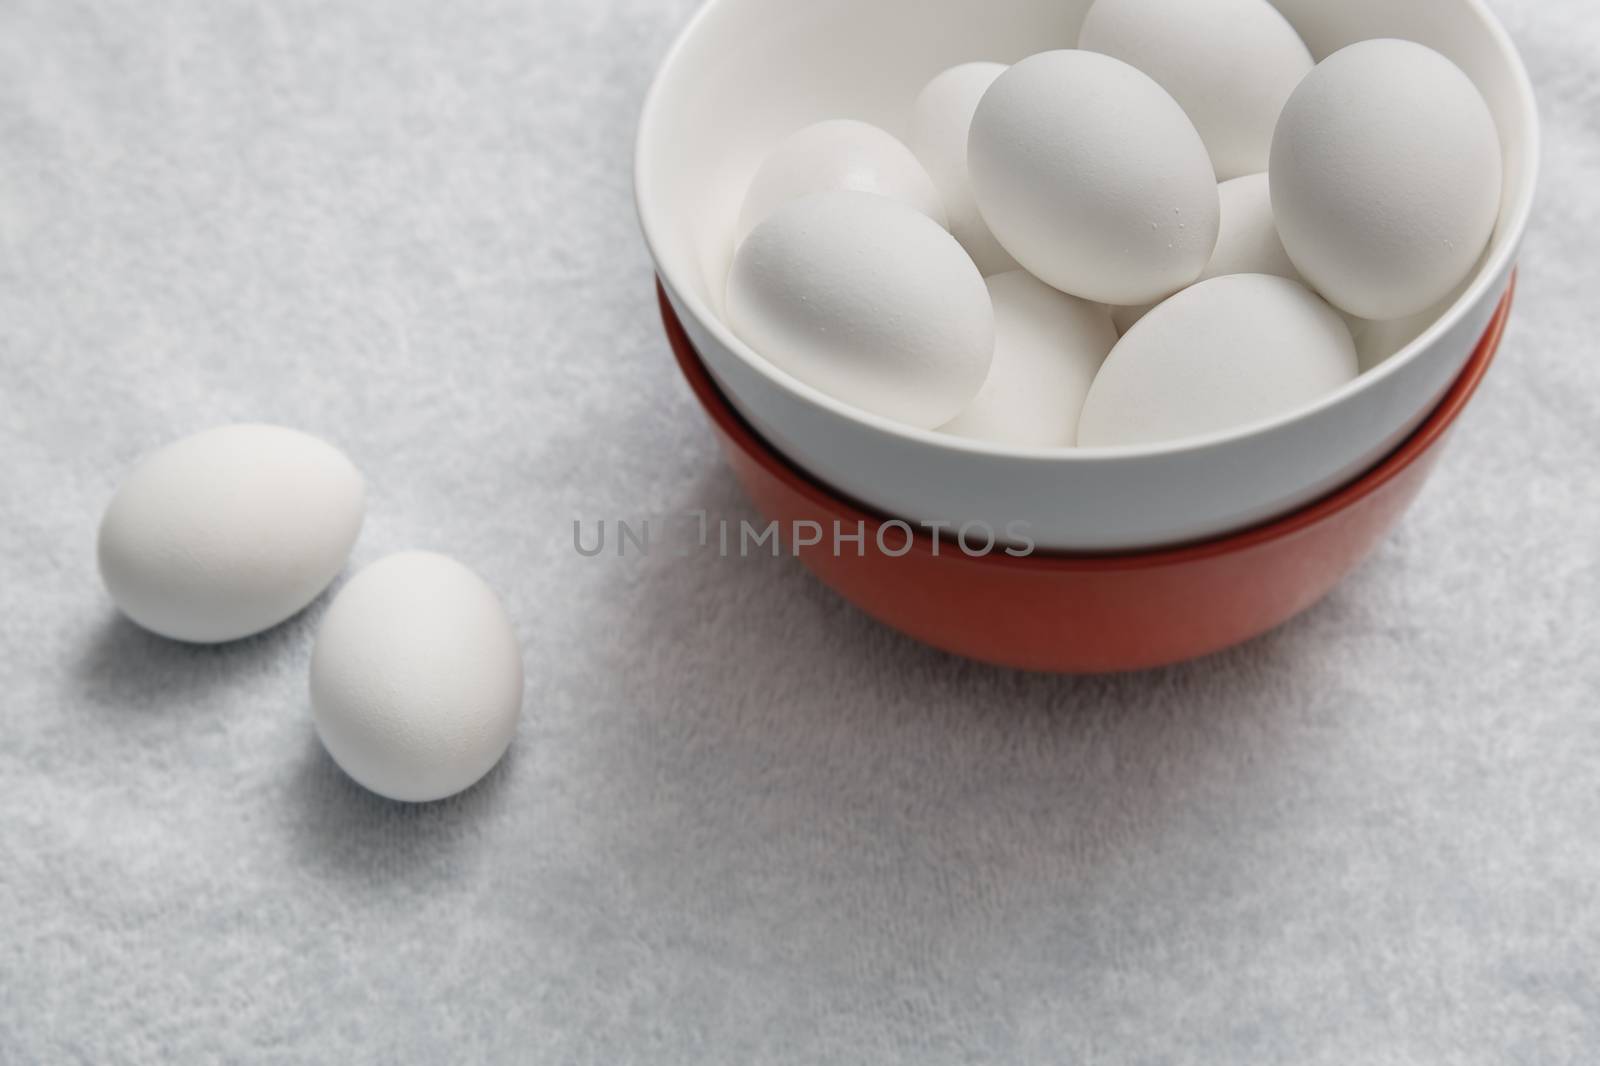 Chicken eggs in bowl